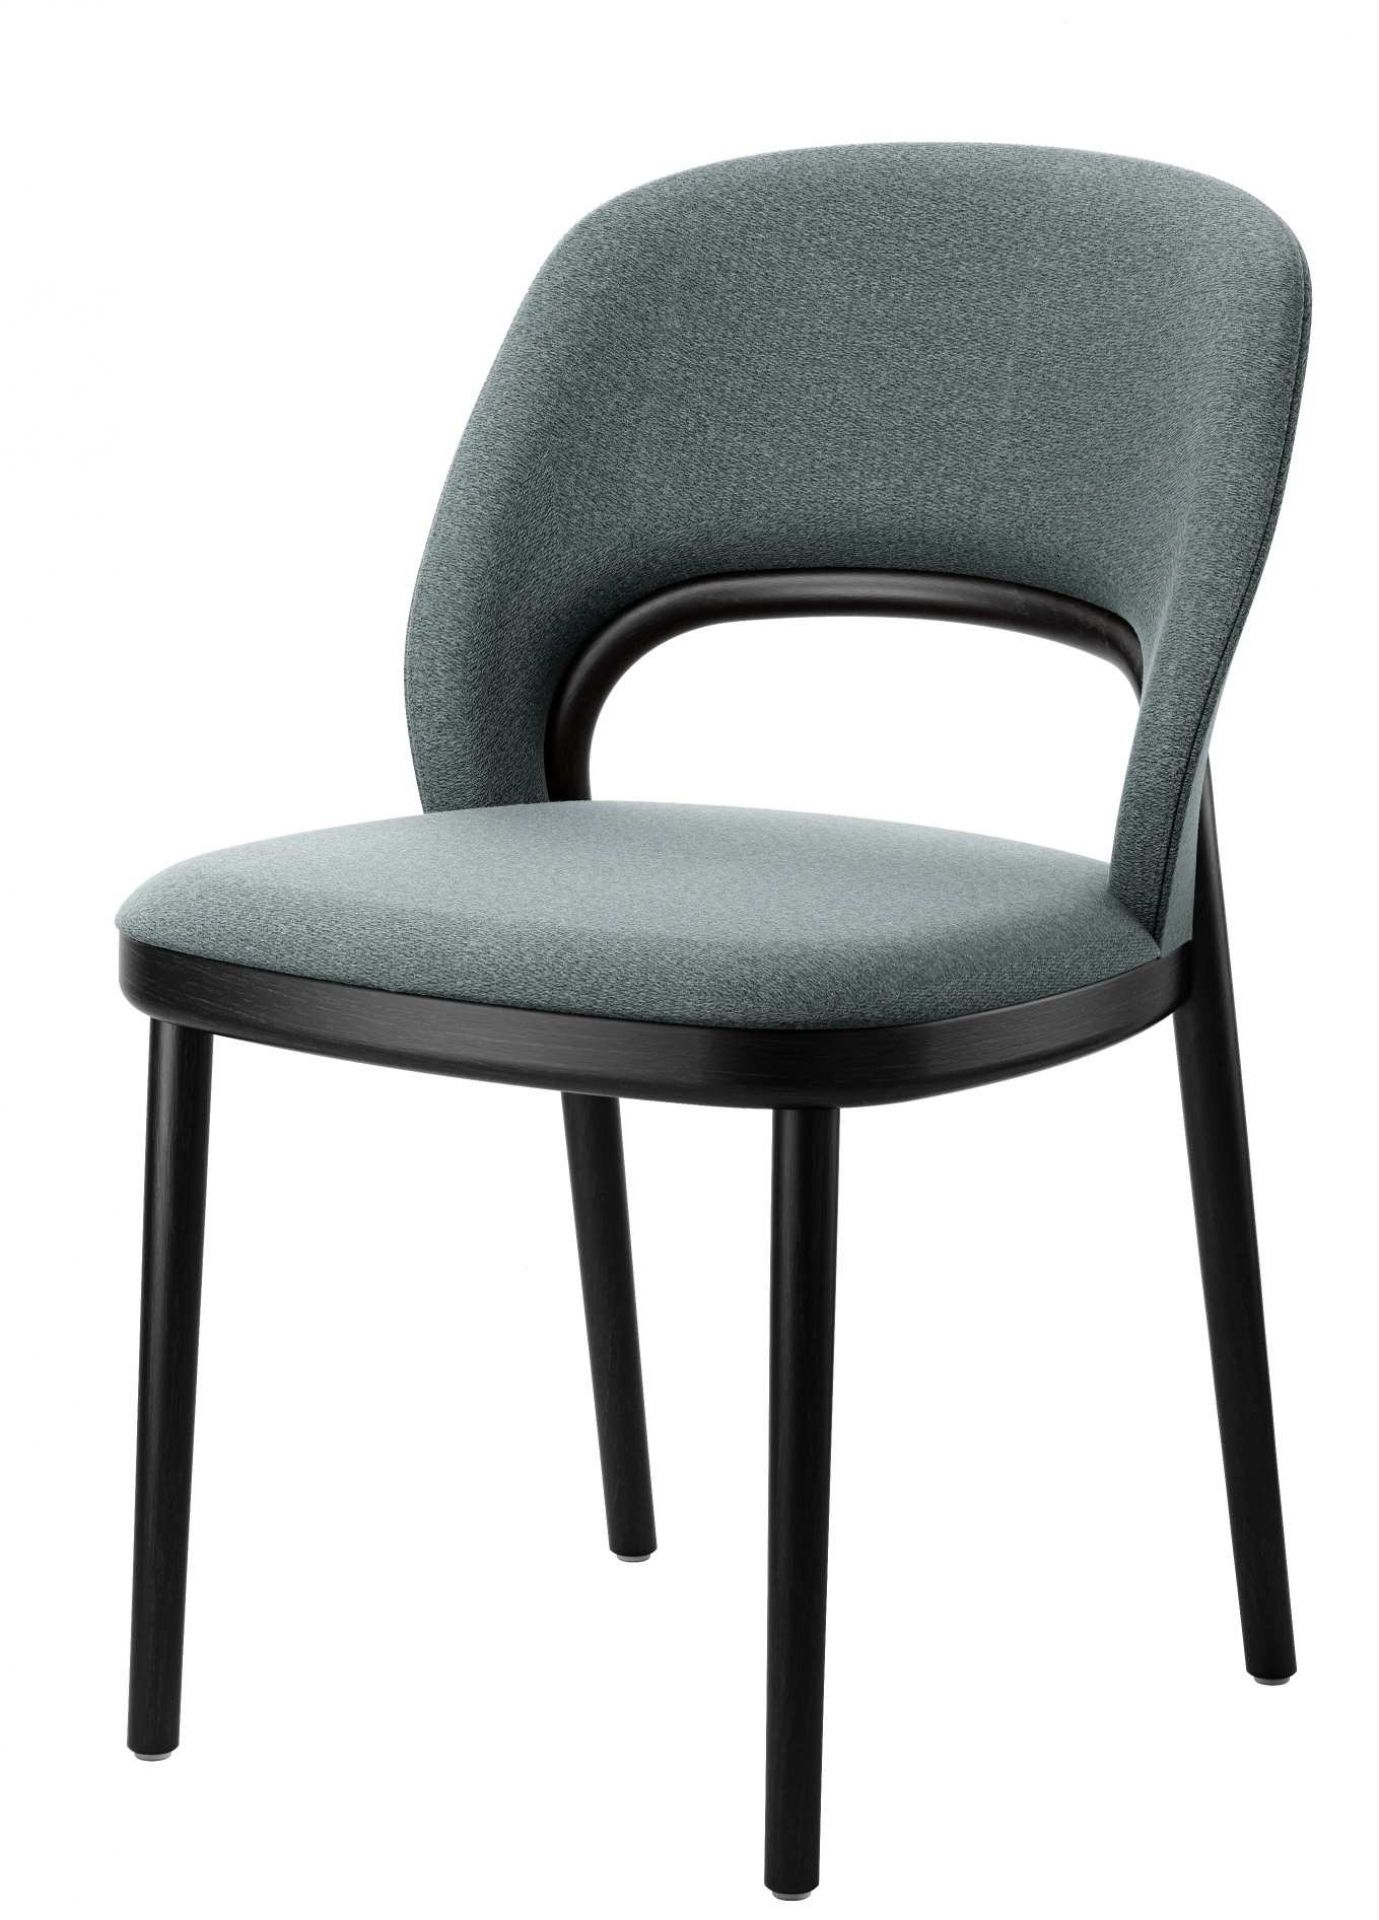 520 P Upholstered chair Thonet